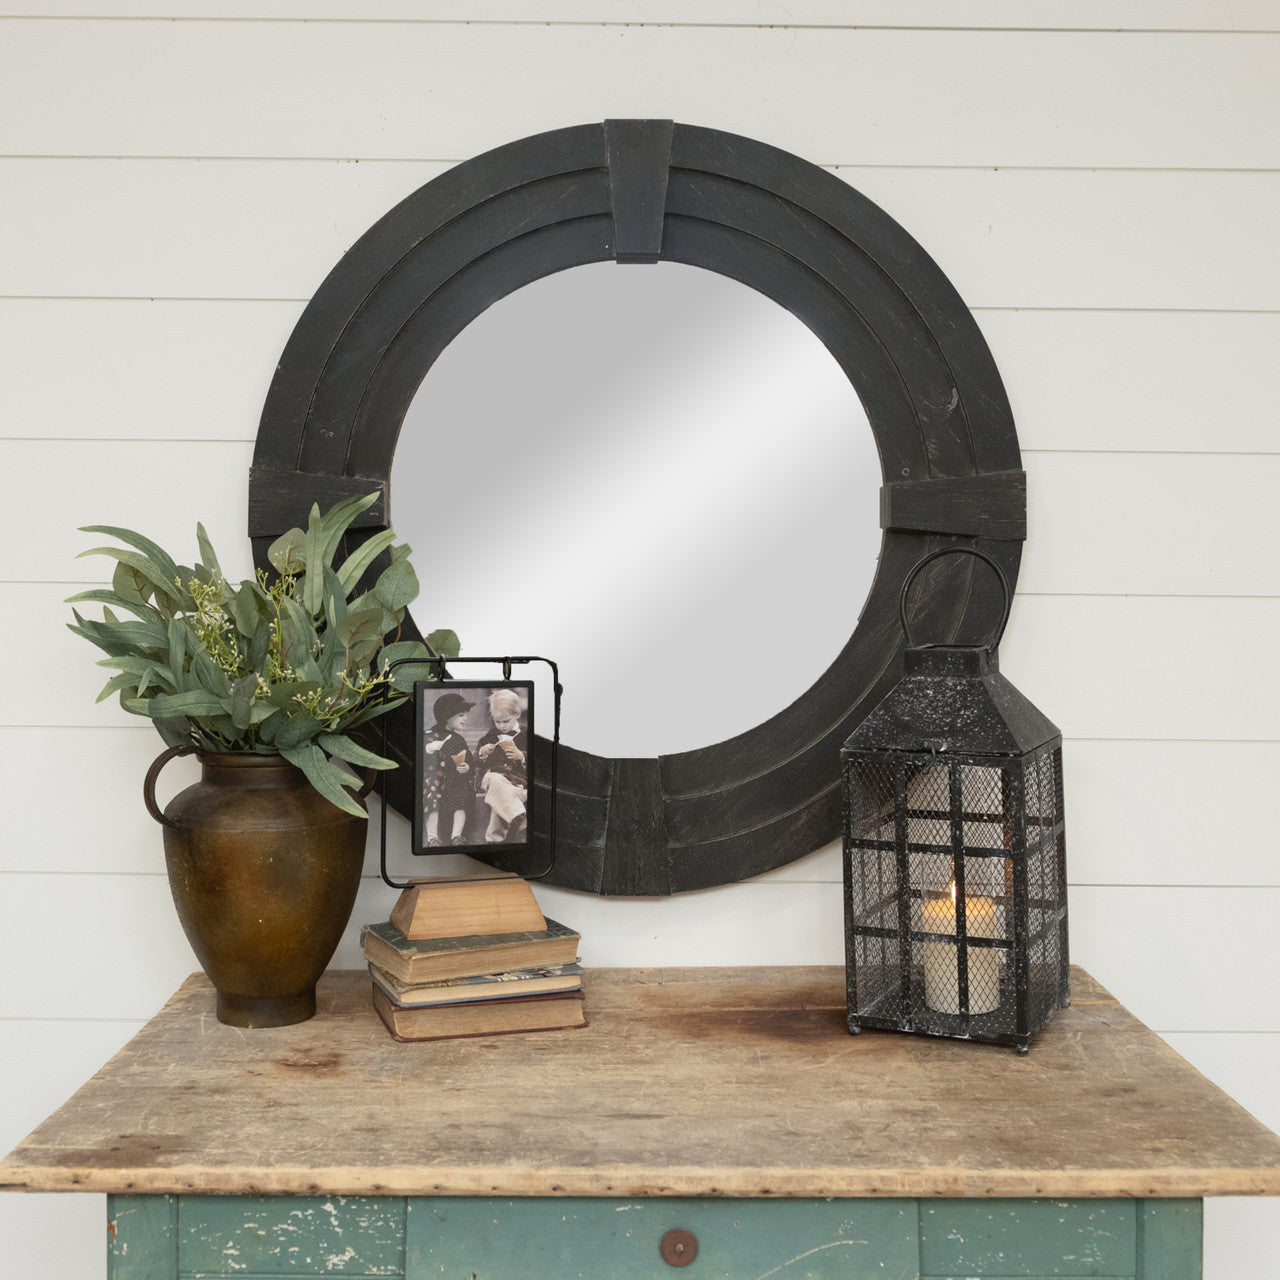 Round Black Wood Wall Mirror